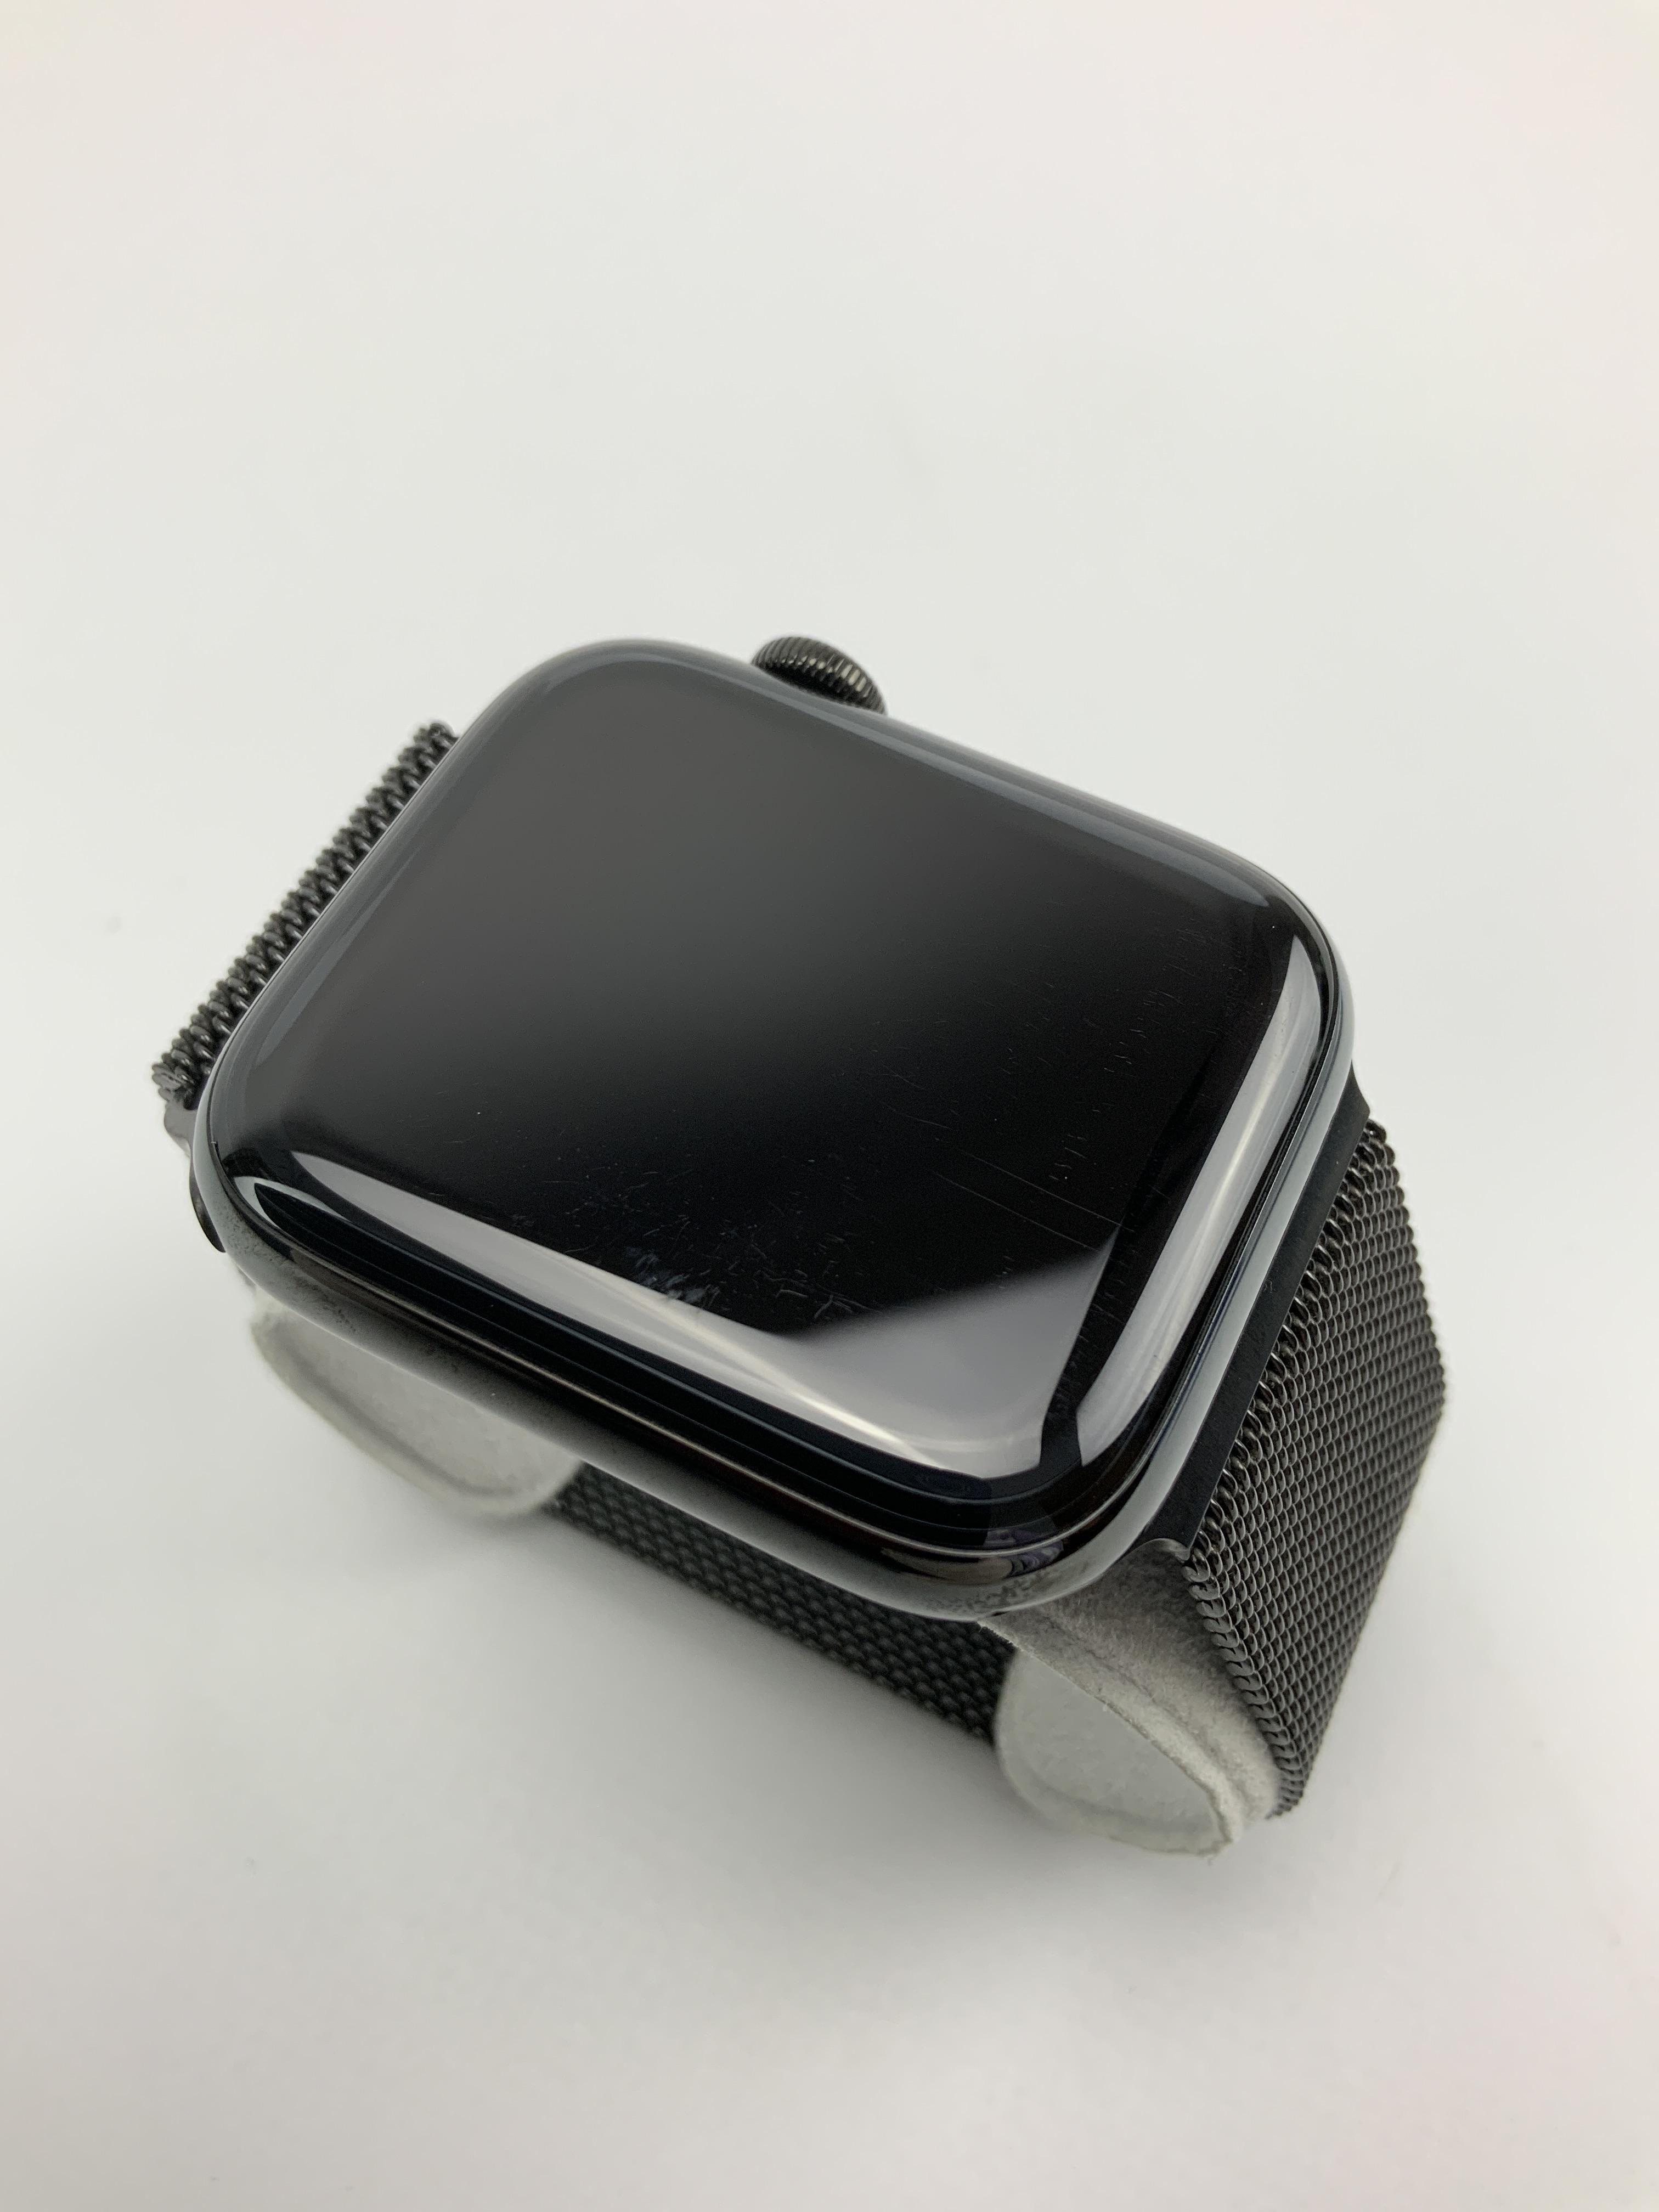 Watch Series 5 Steel Cellular (44mm), Space Black, image 3